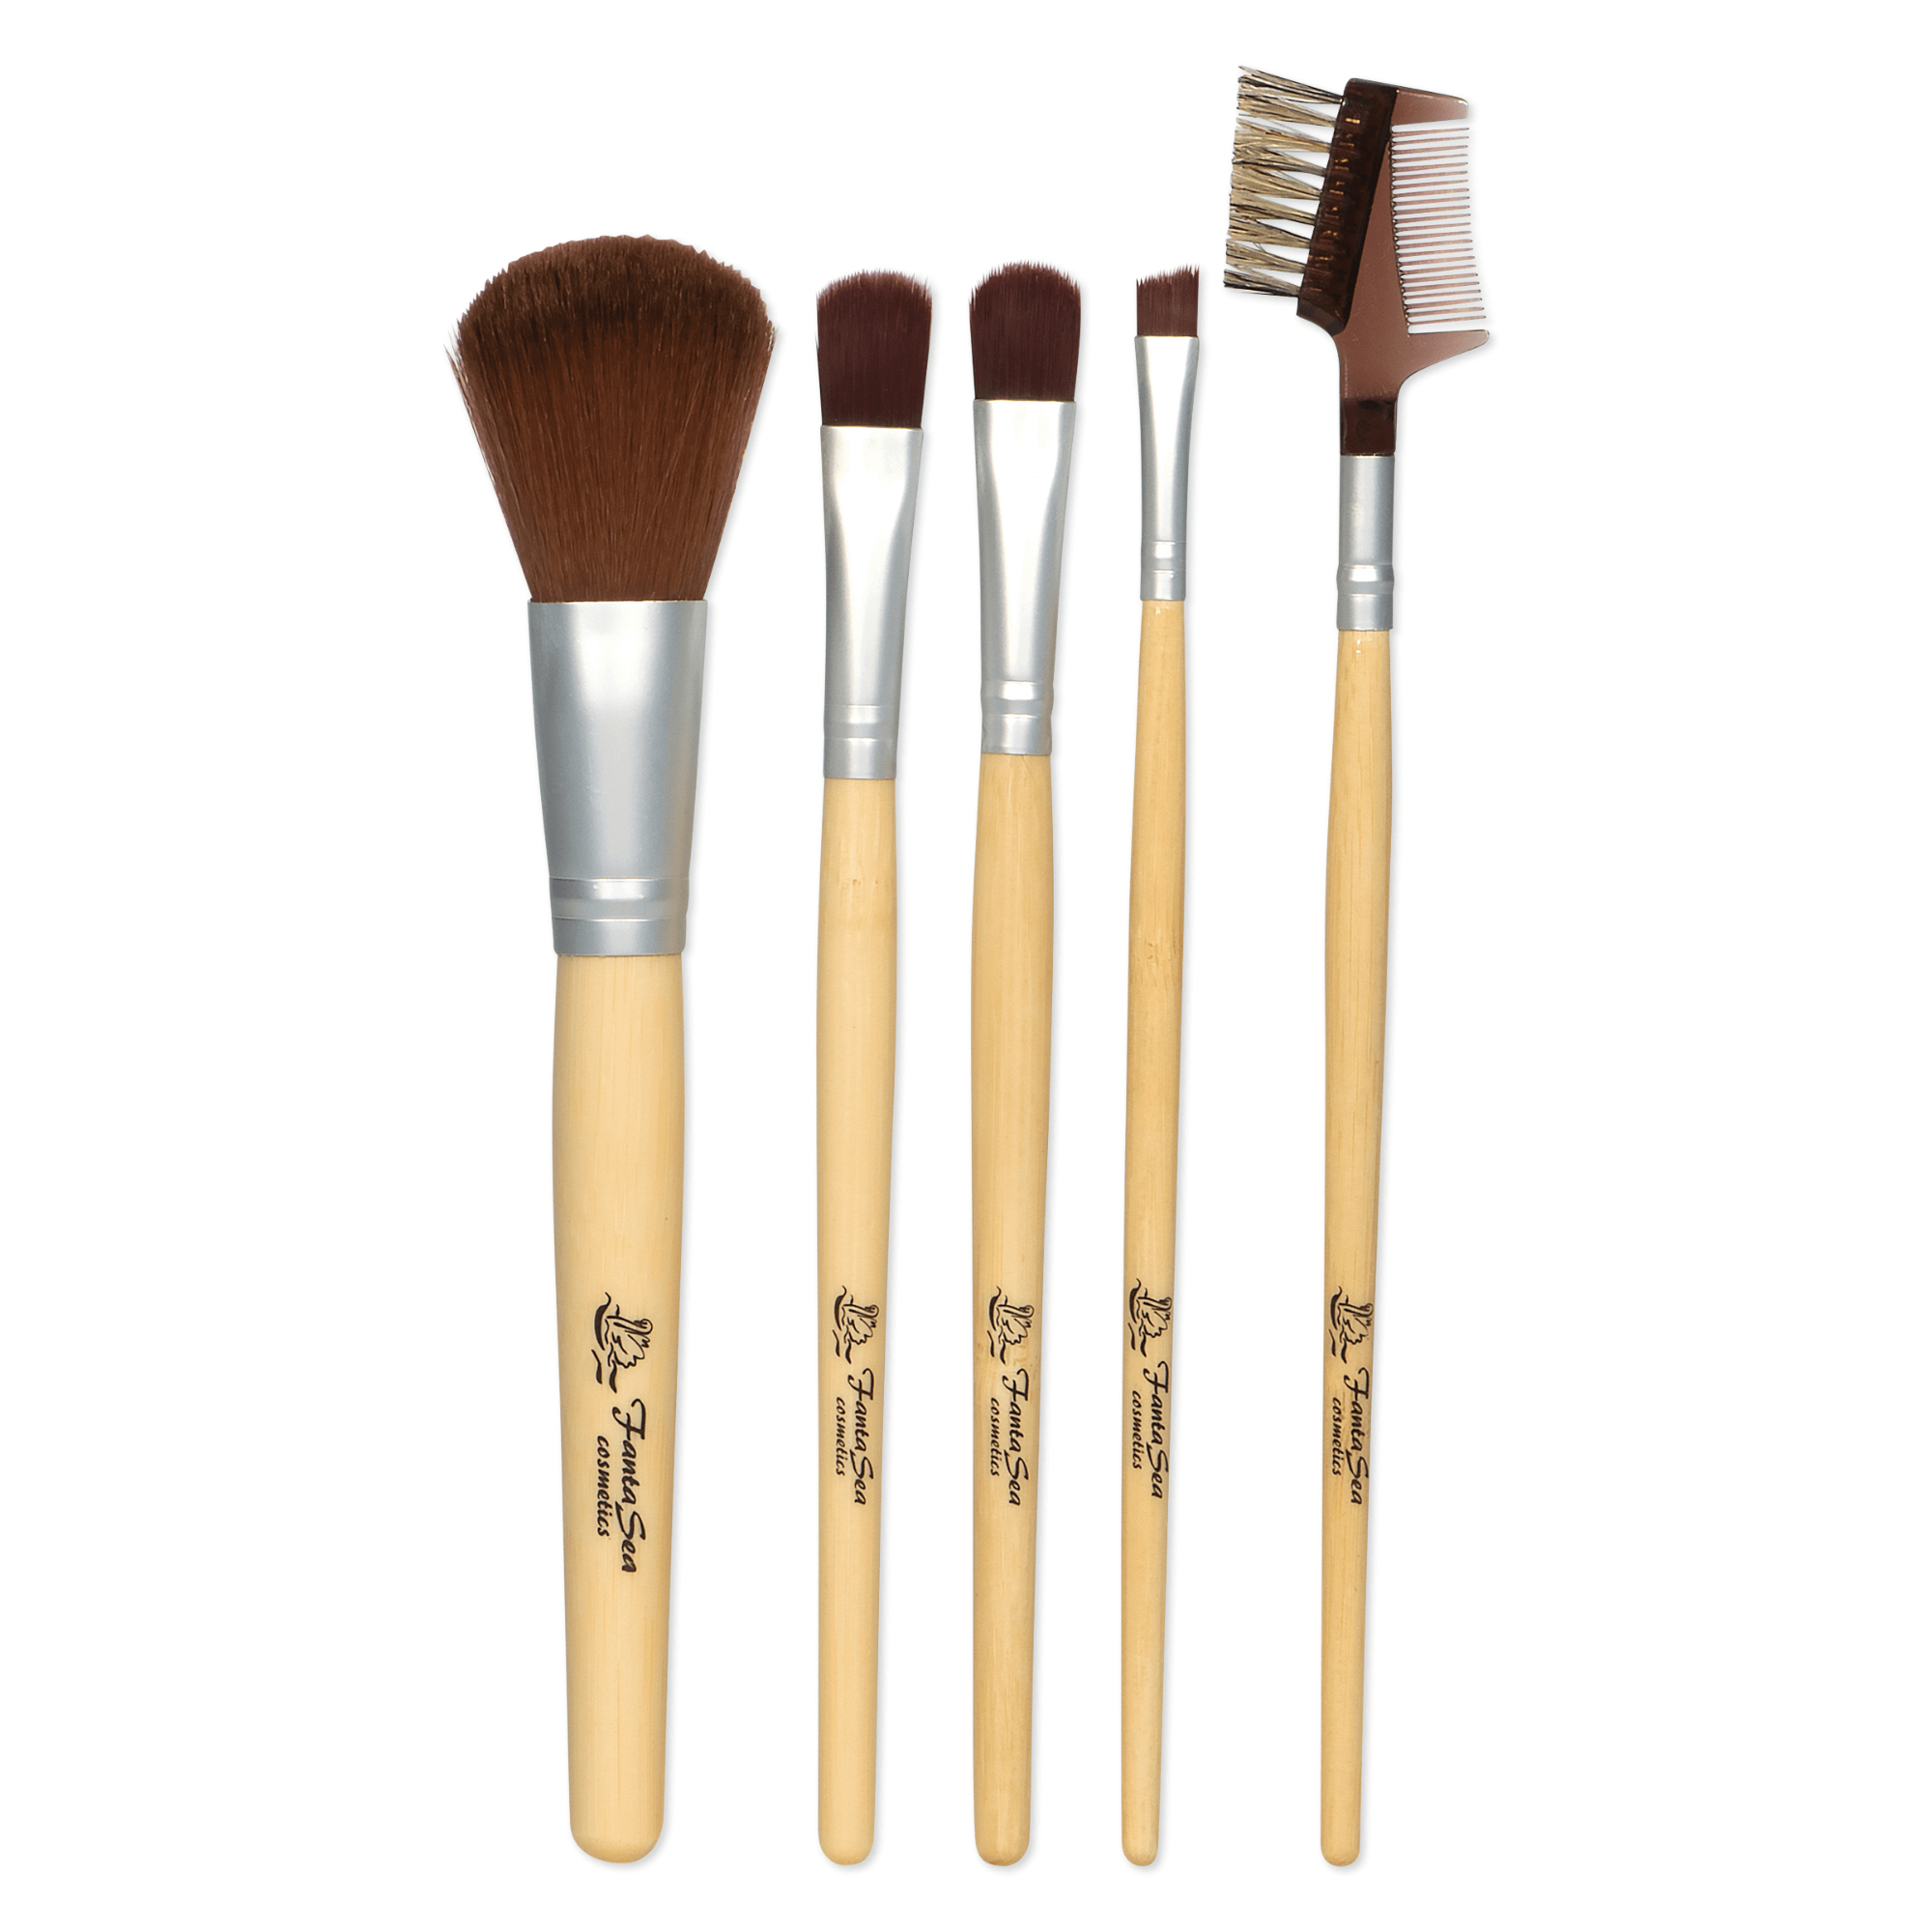 Bamboo Makeup Brush Set with Case - 5 pc.